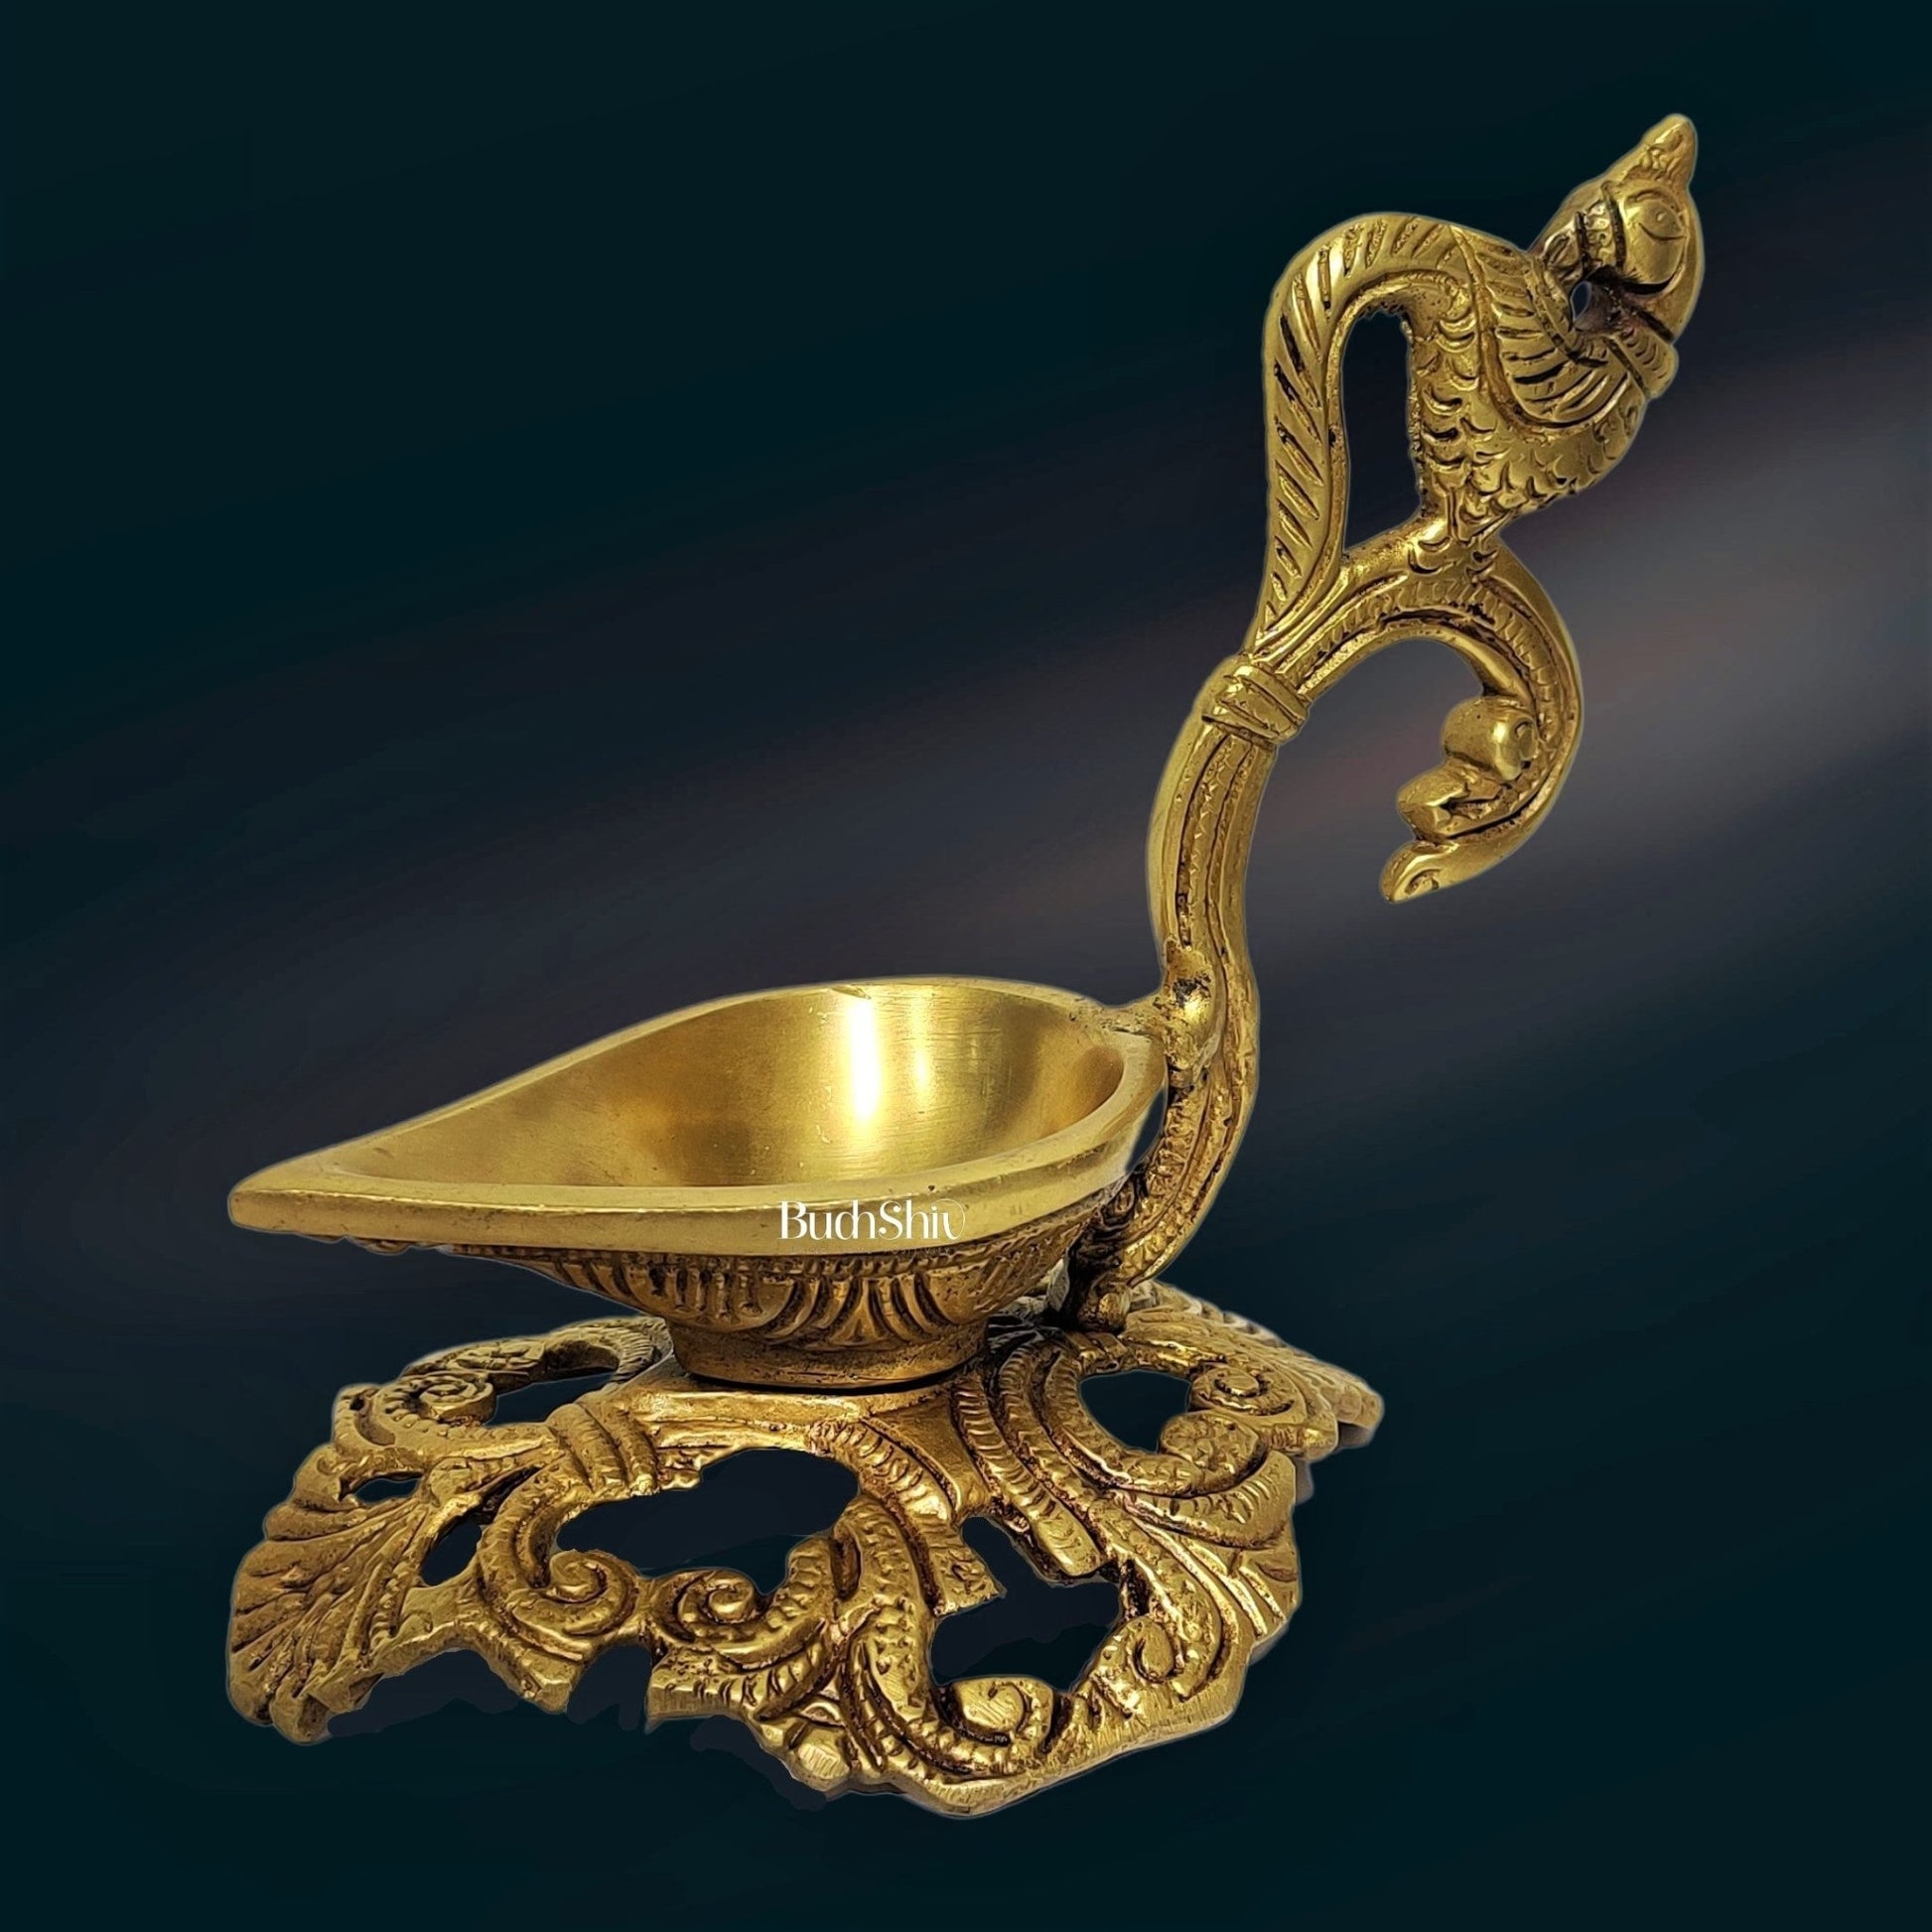 Peacock / annam design brass diya with round engraved stand - Budhshiv.com